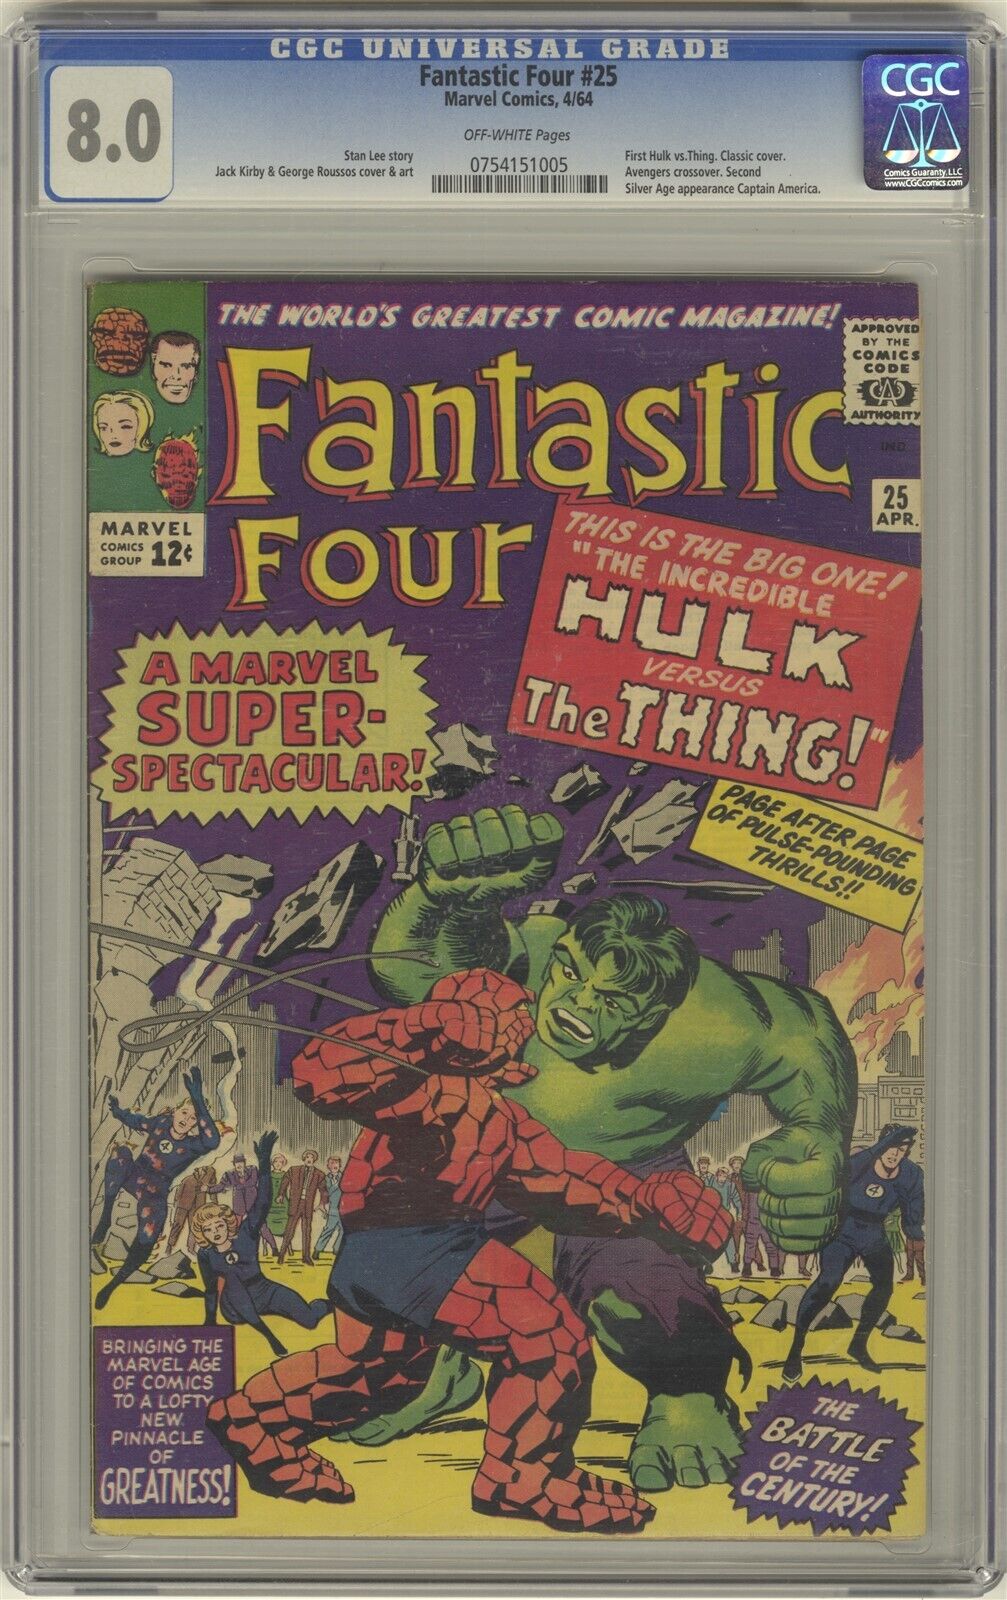 Fantastic Four 25 CGC 80 HI GRADE Marvel Comic KEY Thing vs Hulk Classic Cover